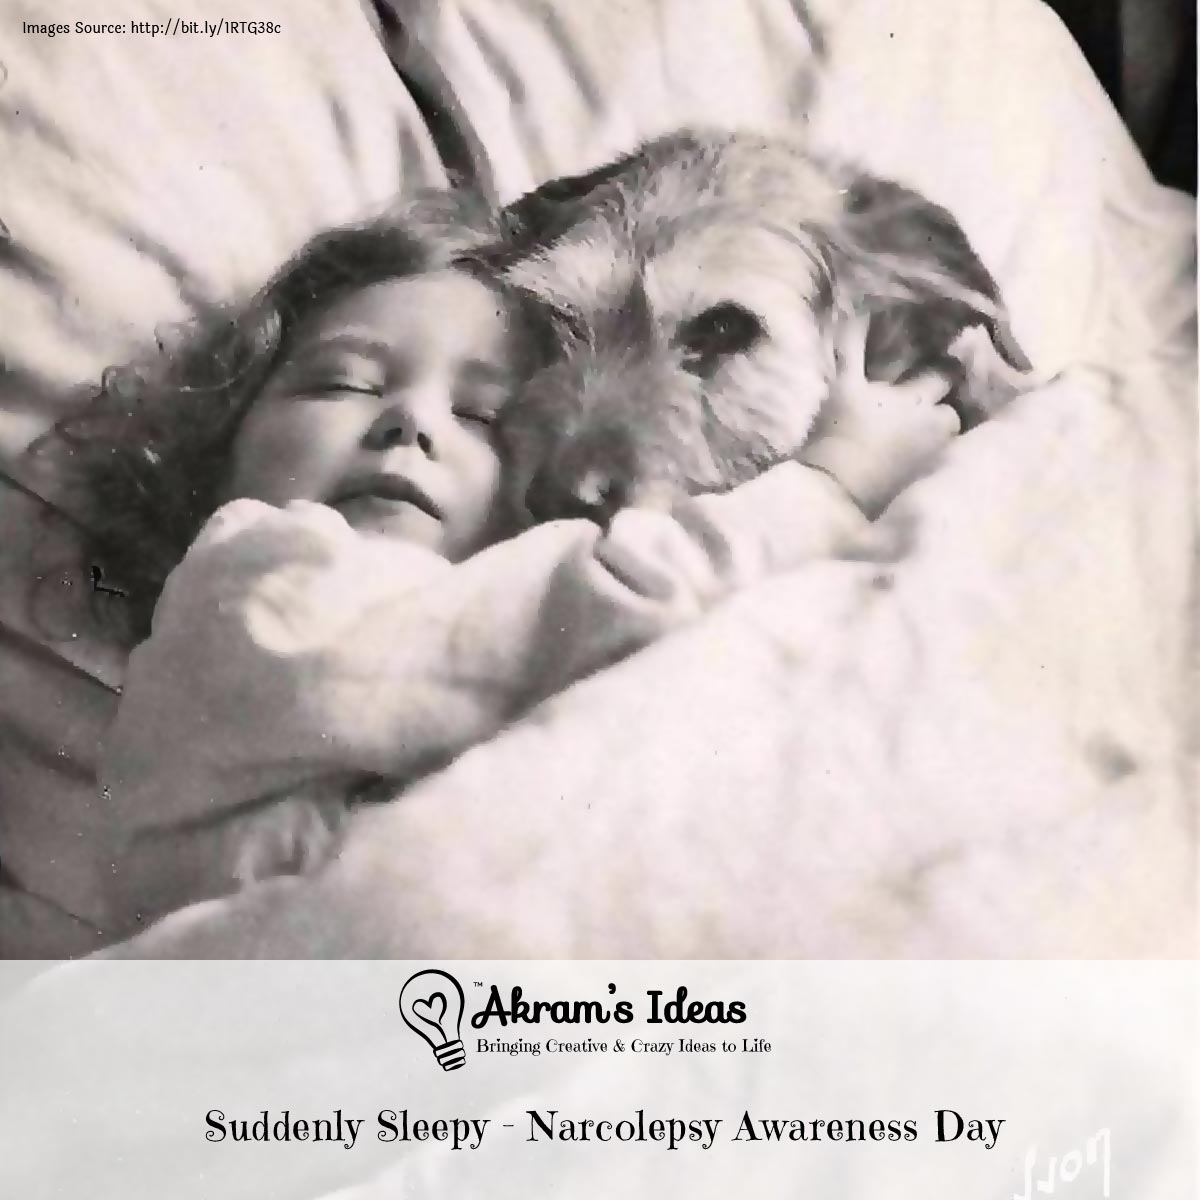 Akram's Ideas: Suddenly Sleepy - Narcolepsy Awareness Day